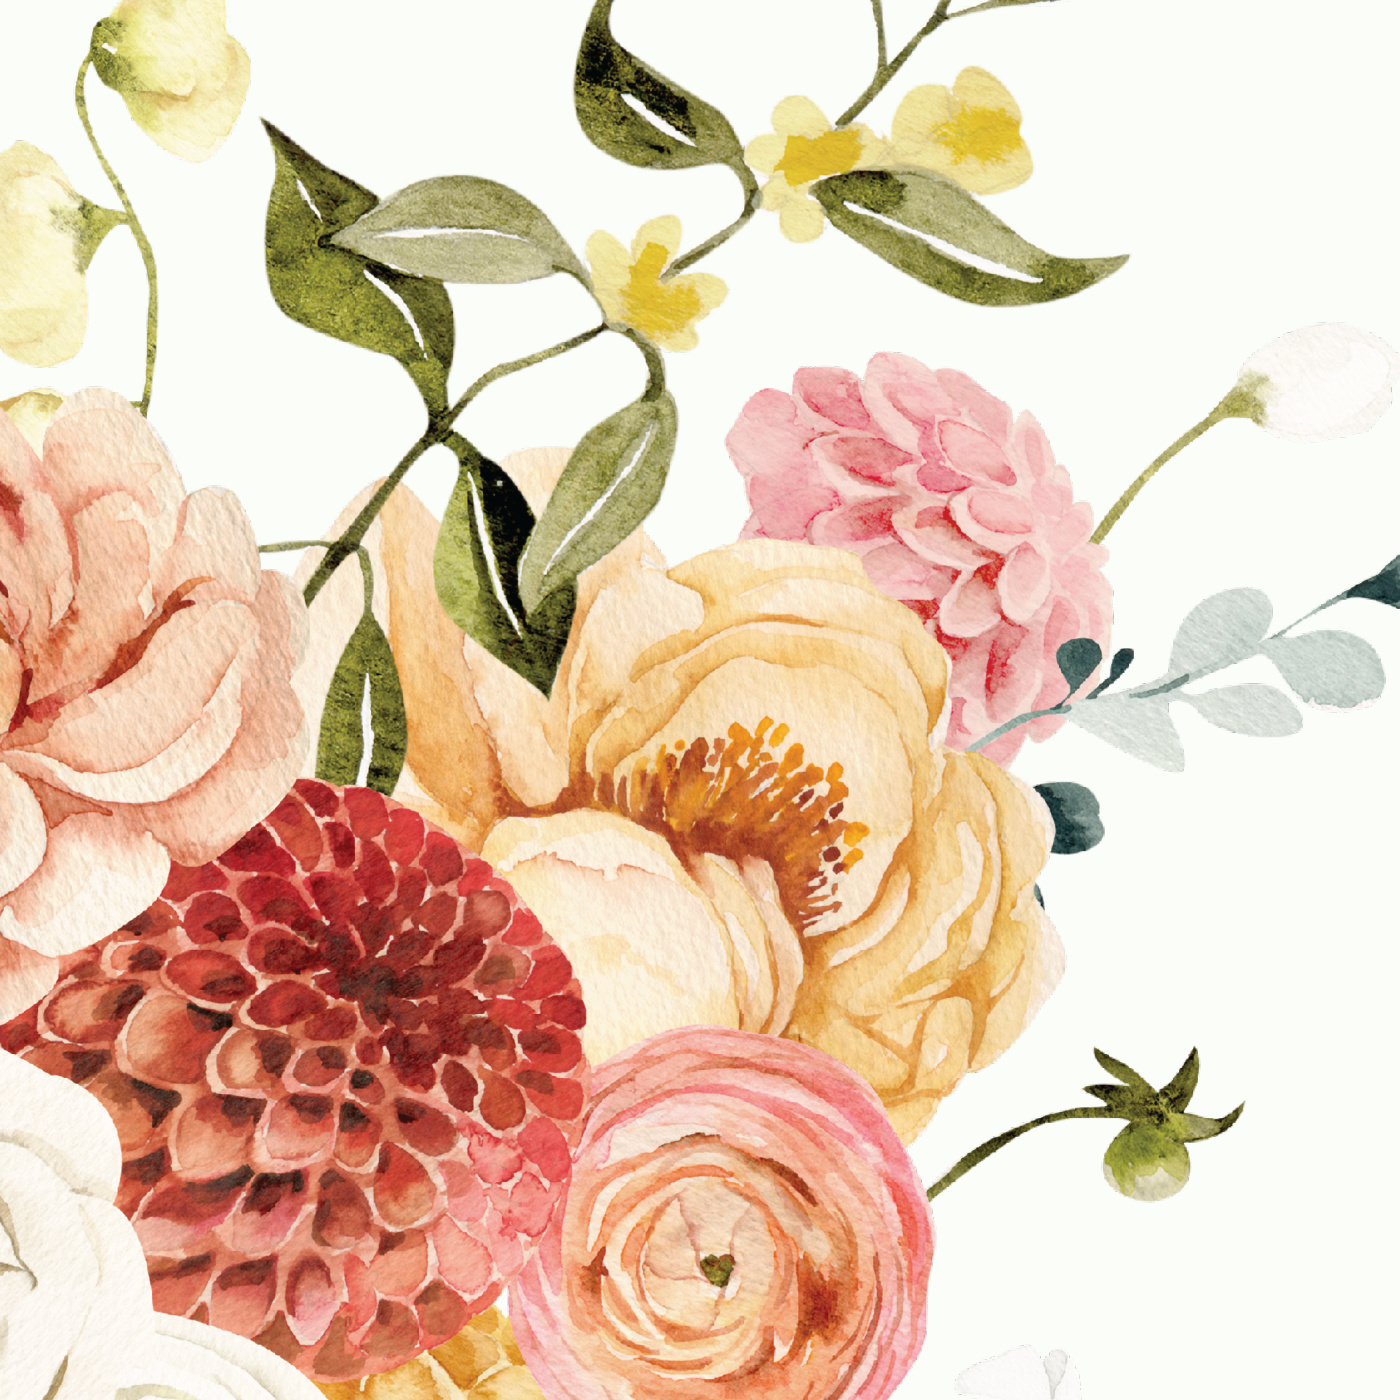 New Flora print wallpaper